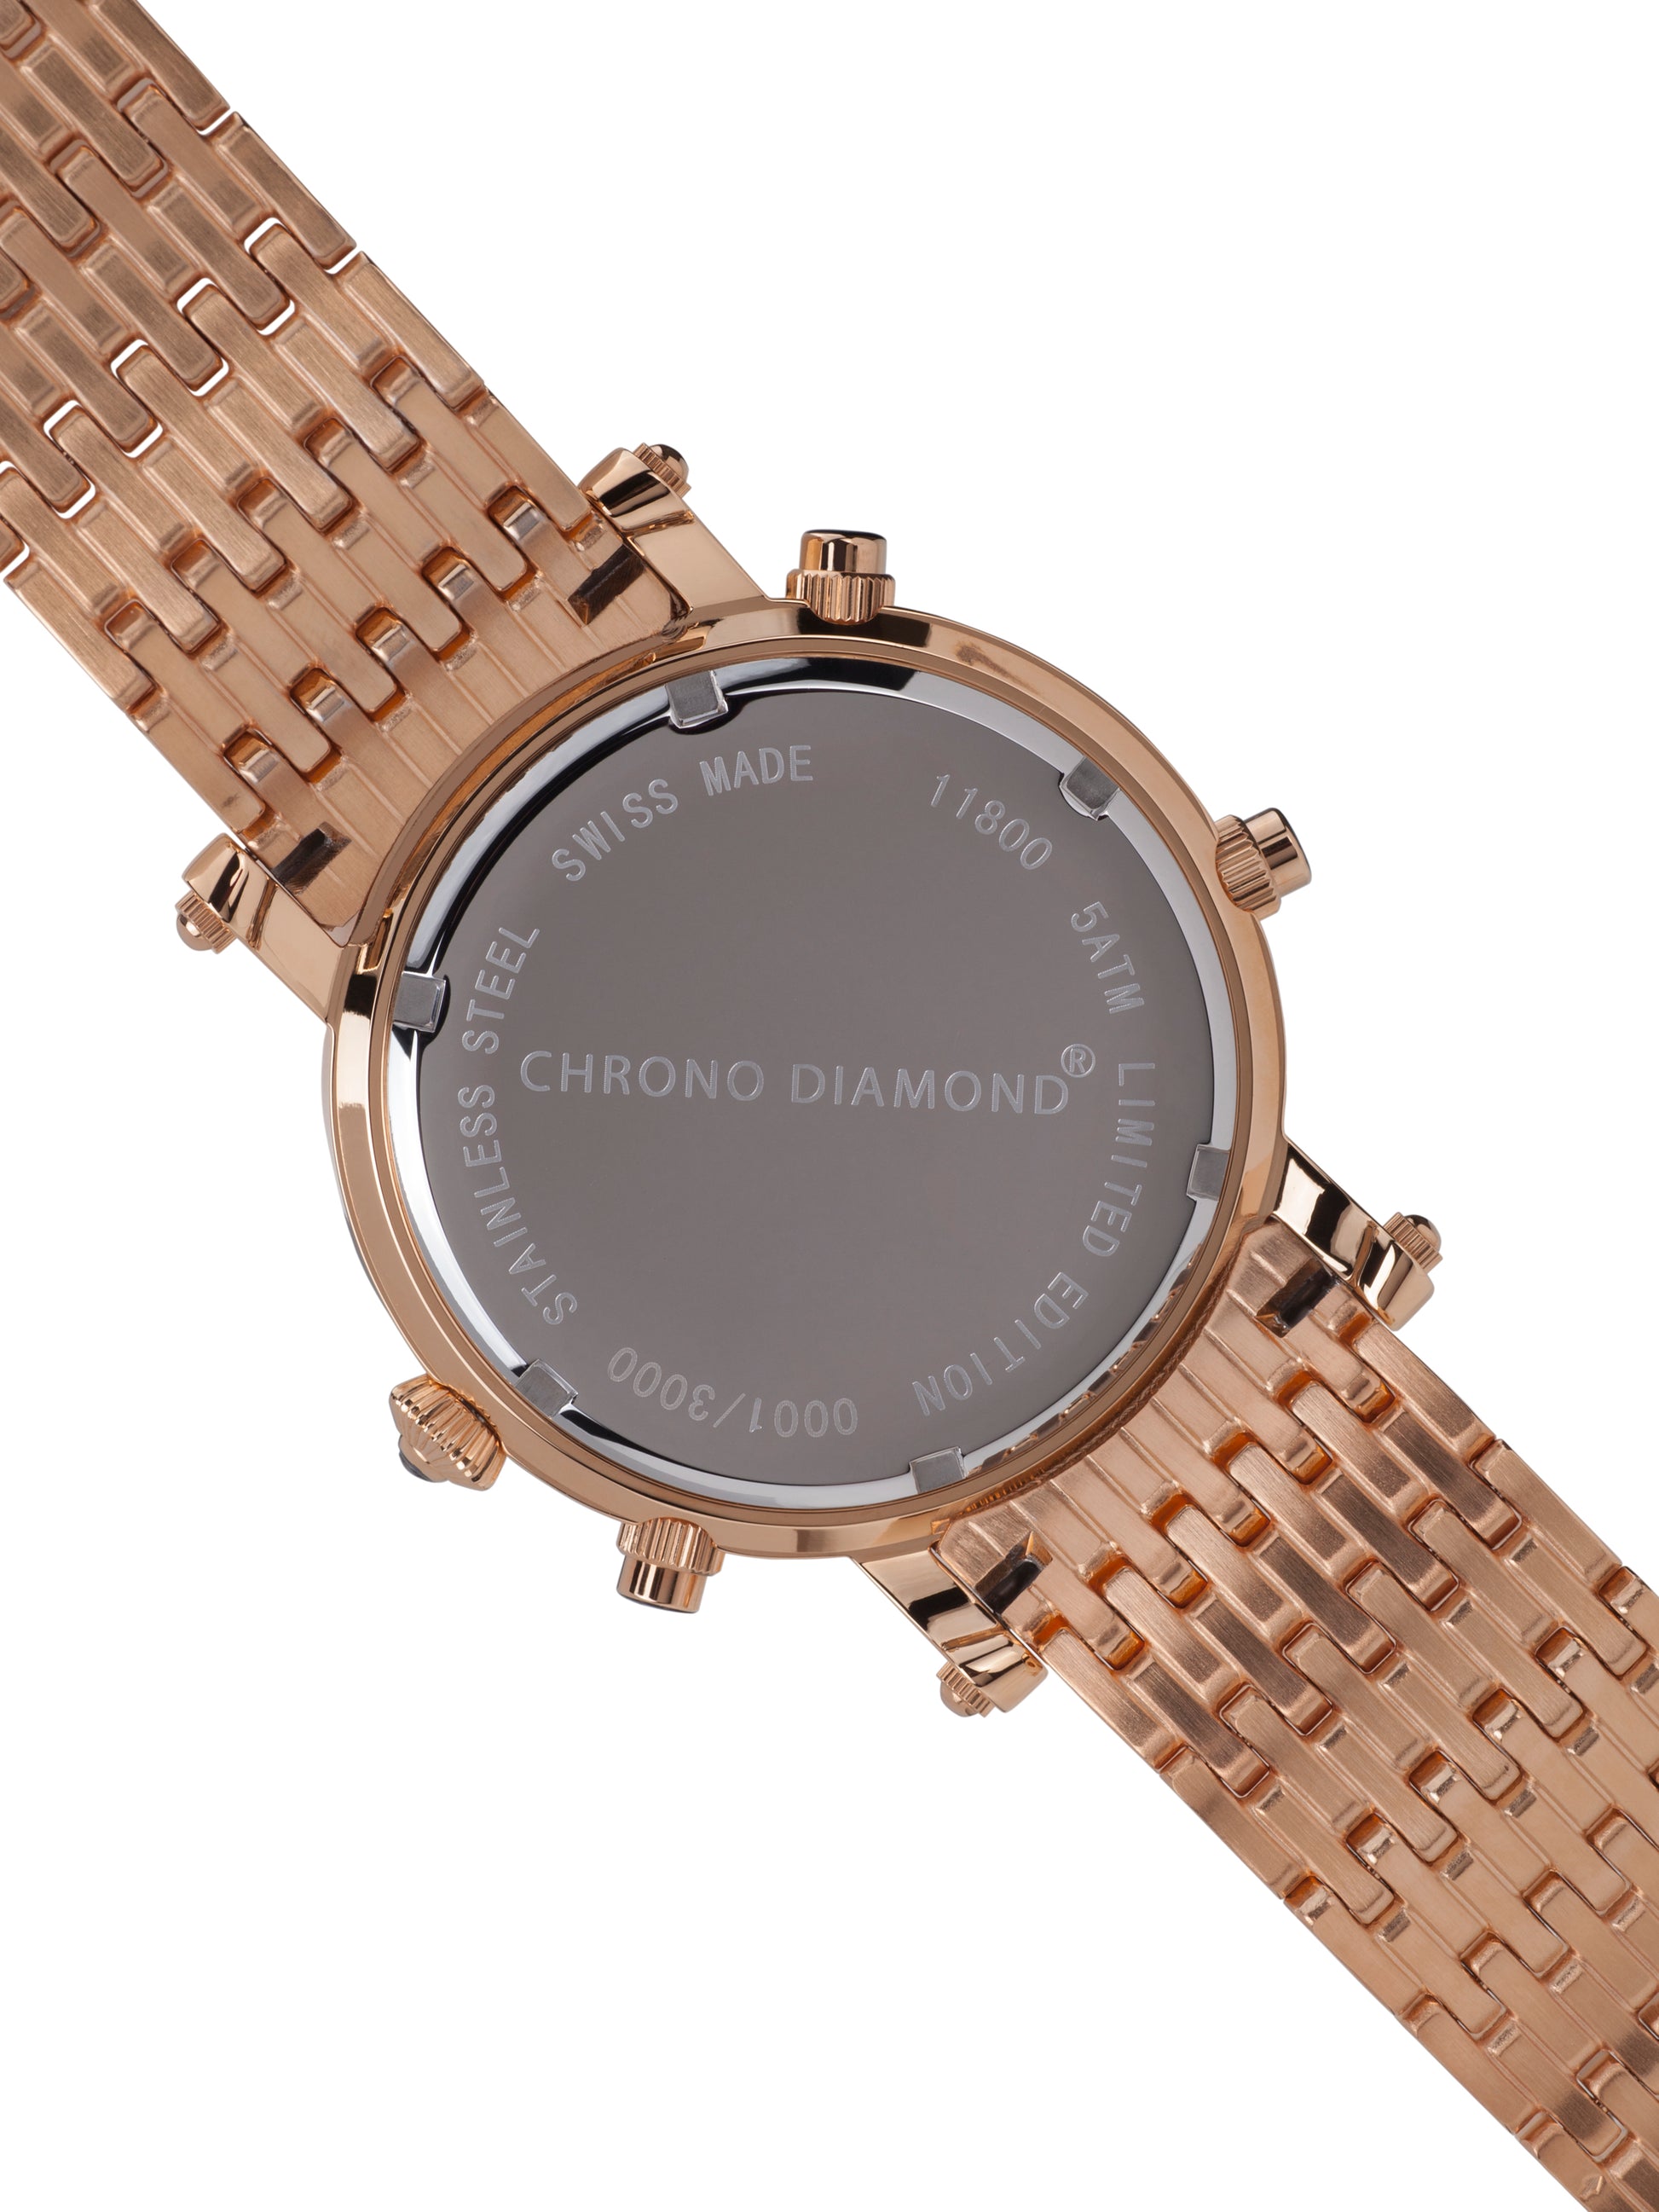 Automatic watches — Ikaro — Chrono Diamond — rosegold IP